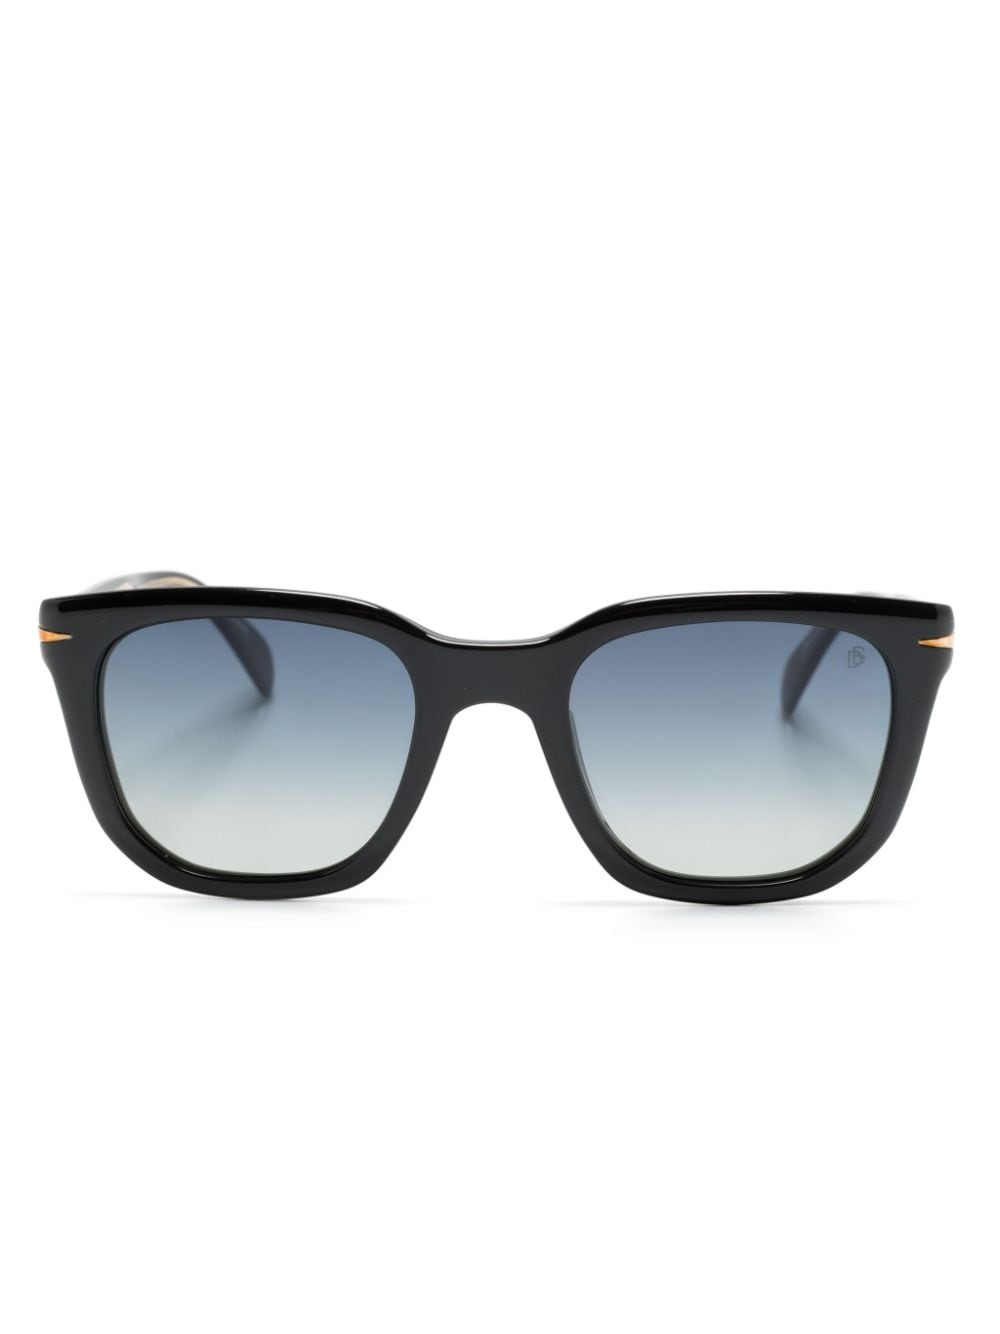 Eyewear by David Beckham square-frame glasses - Black von Eyewear by David Beckham